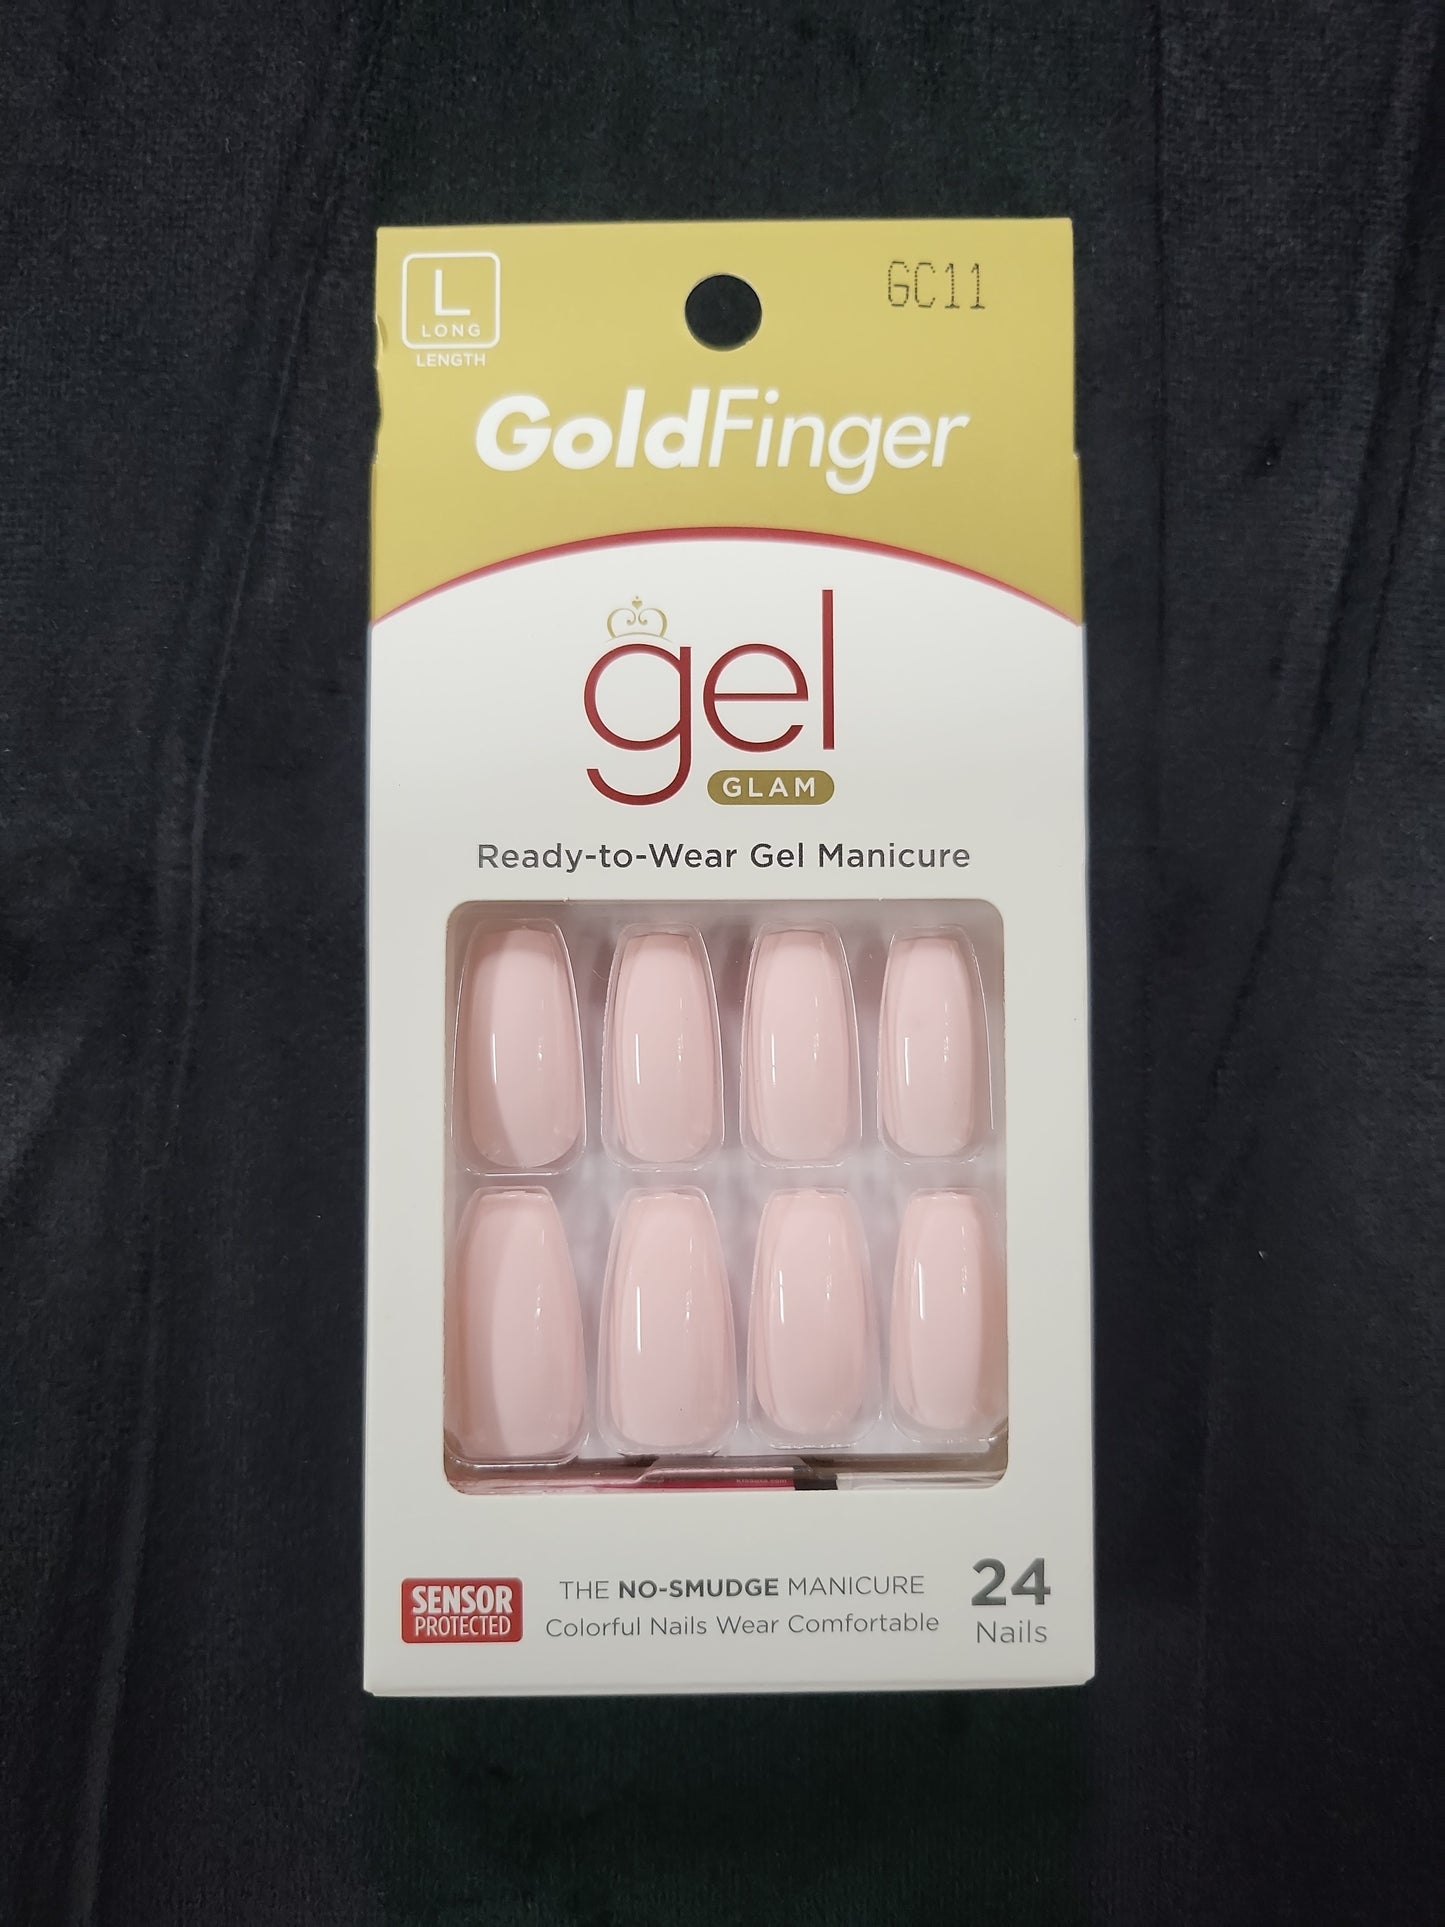 GoldFinger Gel Glam GC11